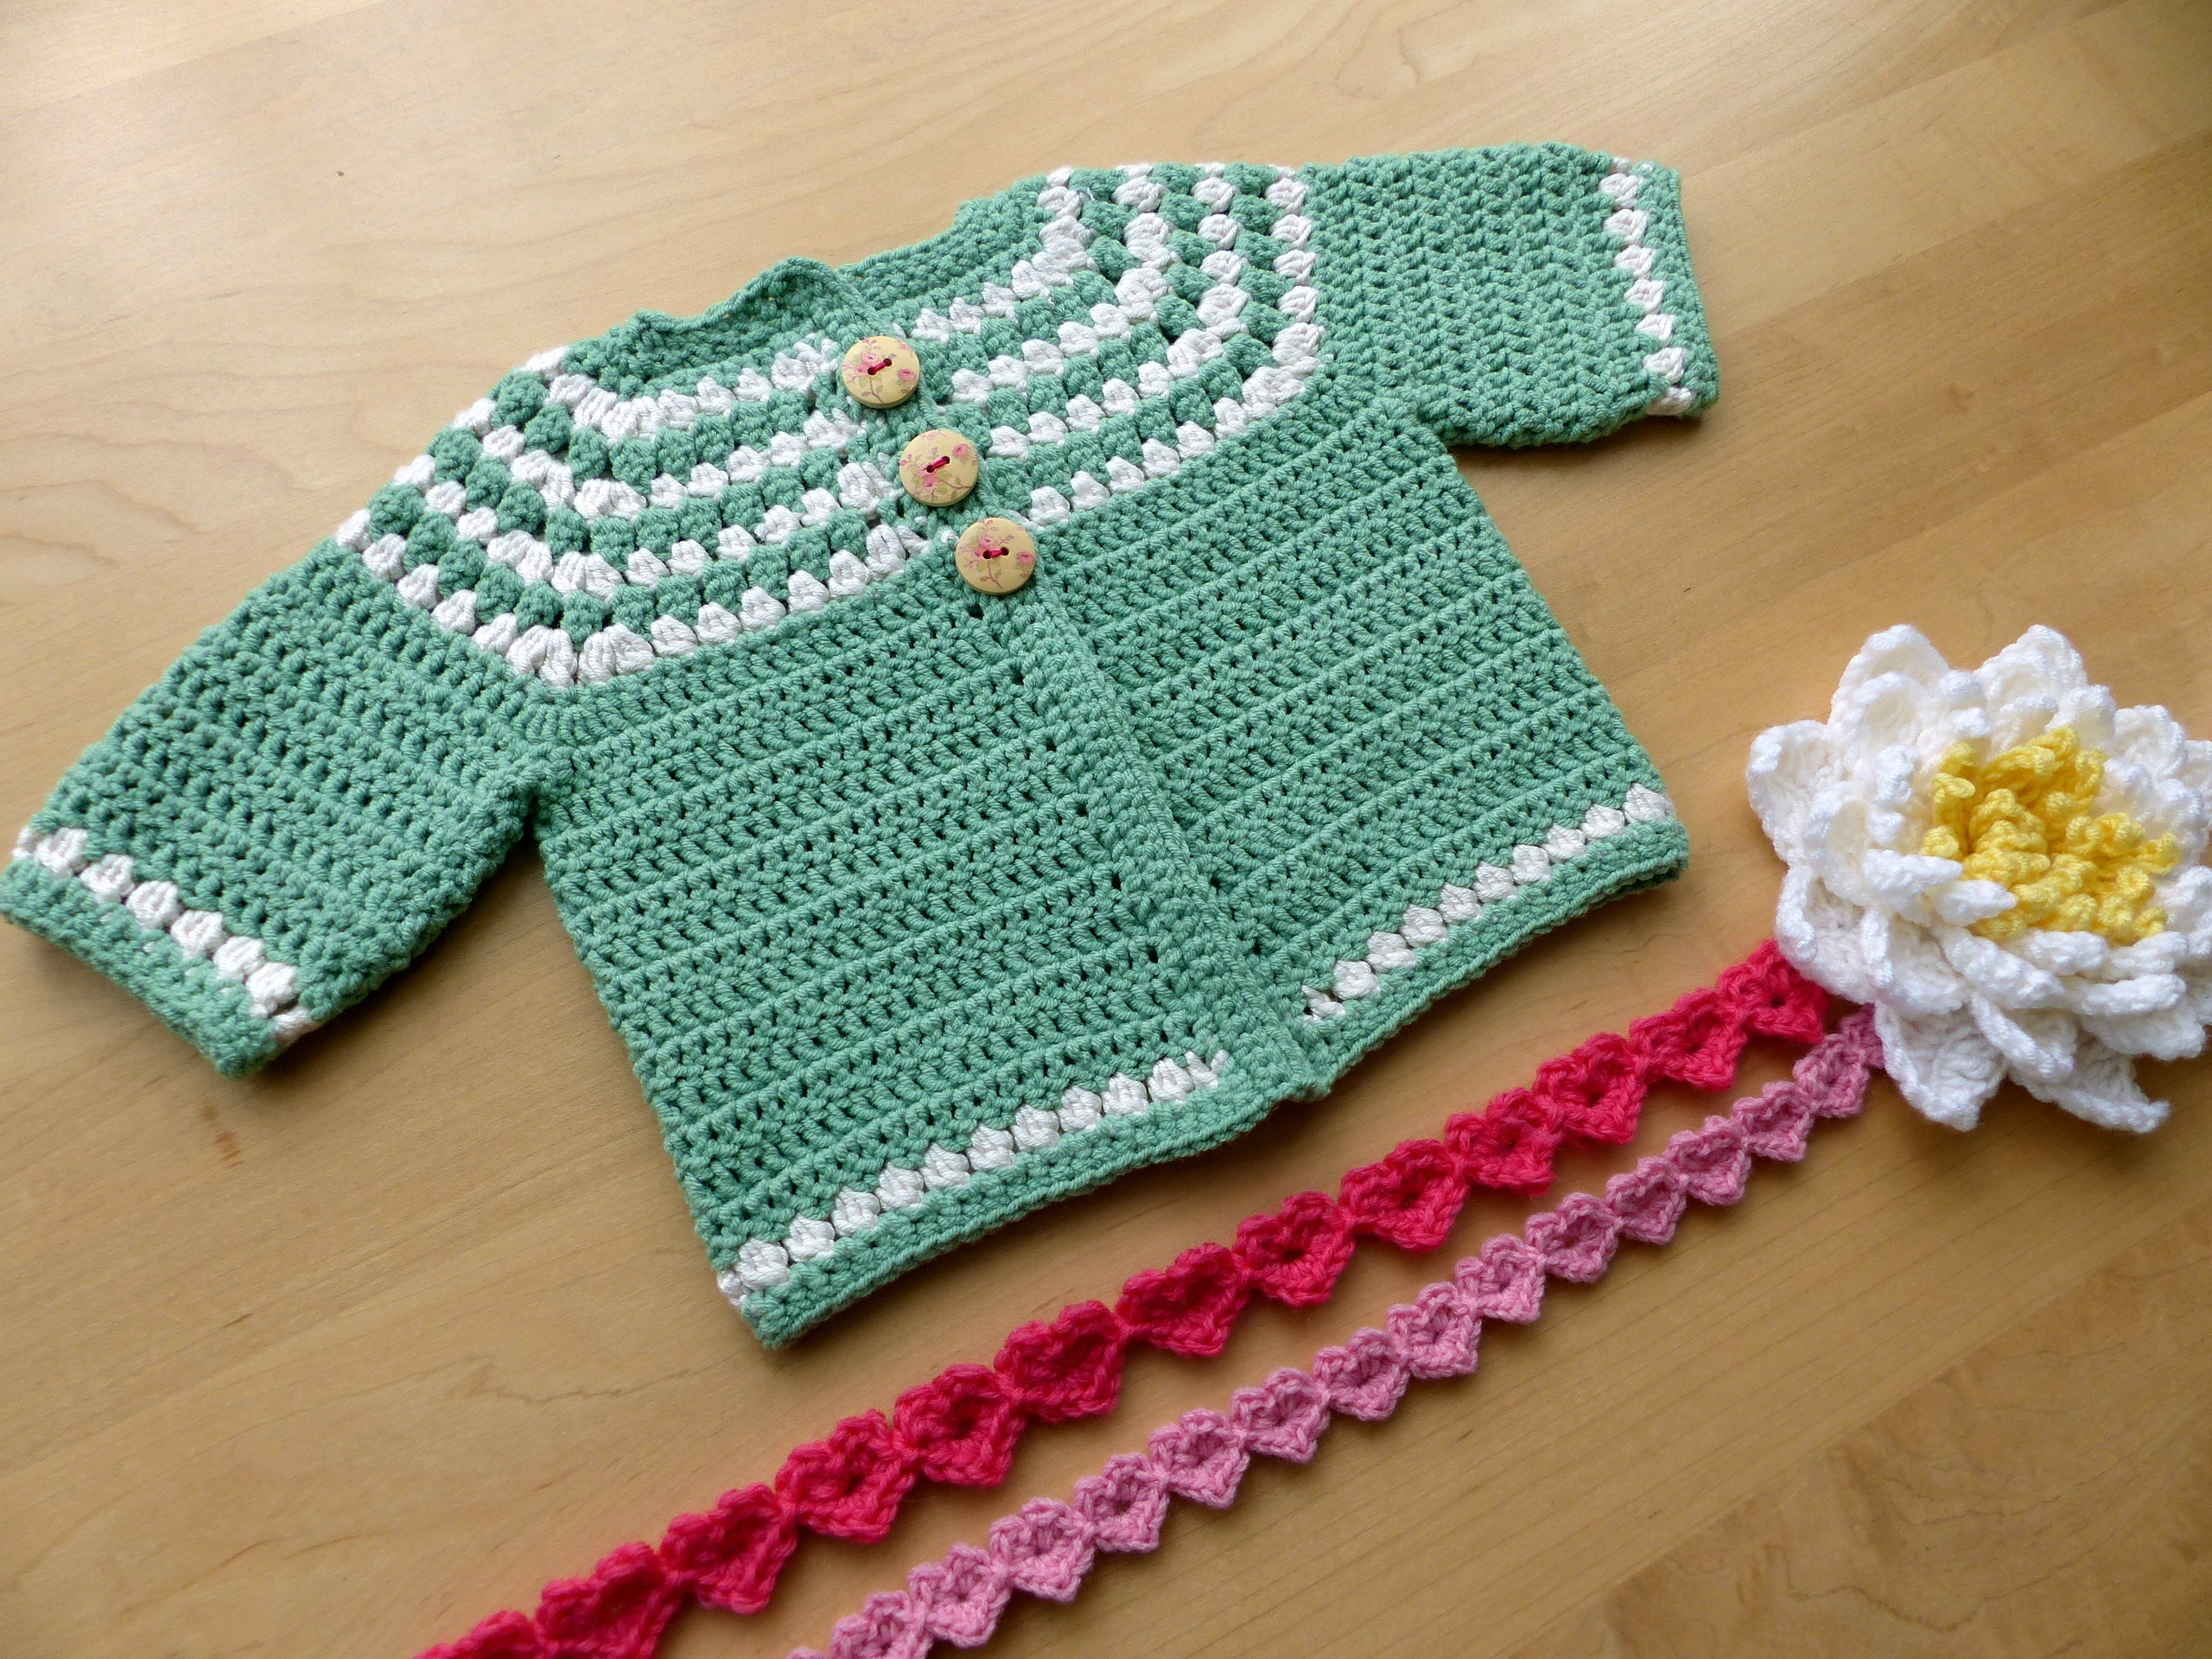 Crochet Patterns For Baby Cluster Yoke Ba Cardigan Make My Day Creative